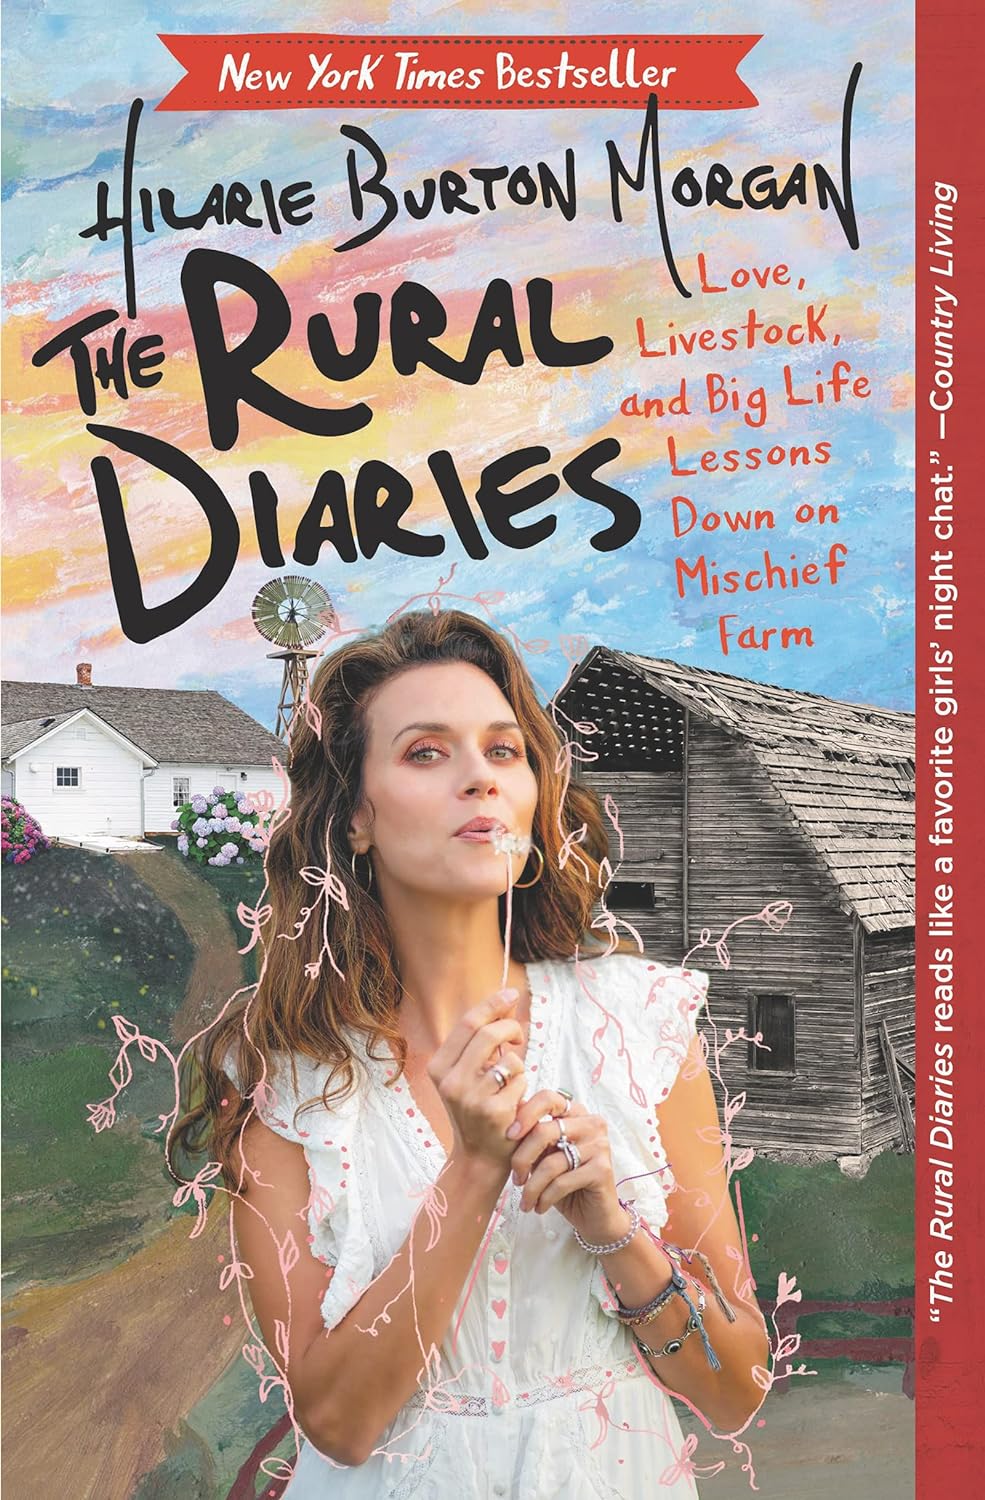 Hilarie Burton Morgan- The Rural Diaries